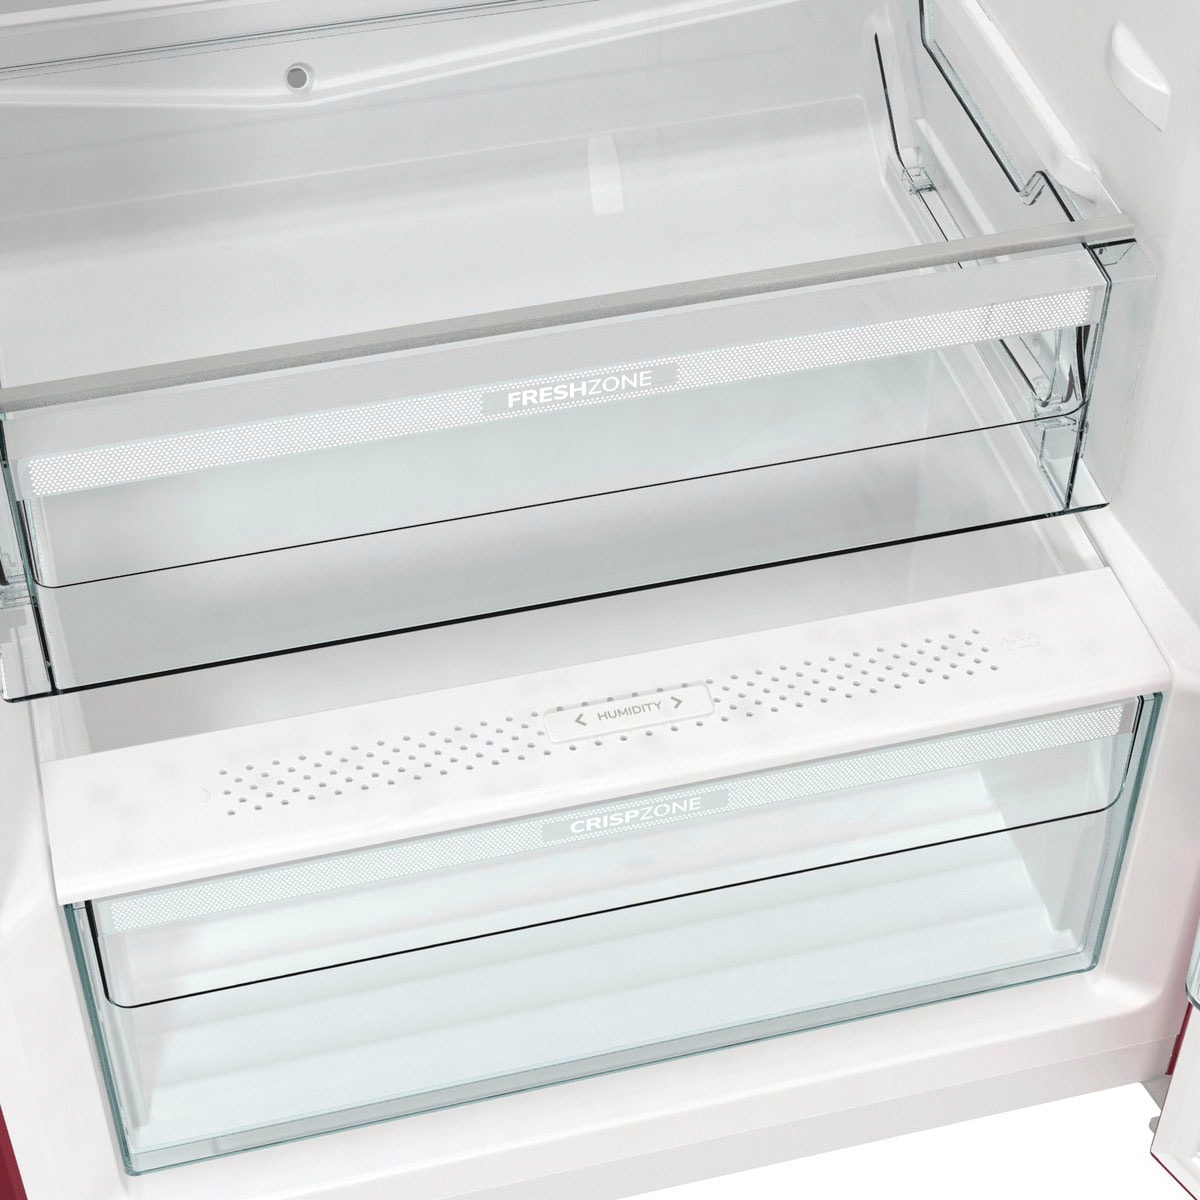 GORENJE Kühlschrank, ORB615DR-L, 152,5 cm hoch, 59,5 cm breit per Raten |  BAUR